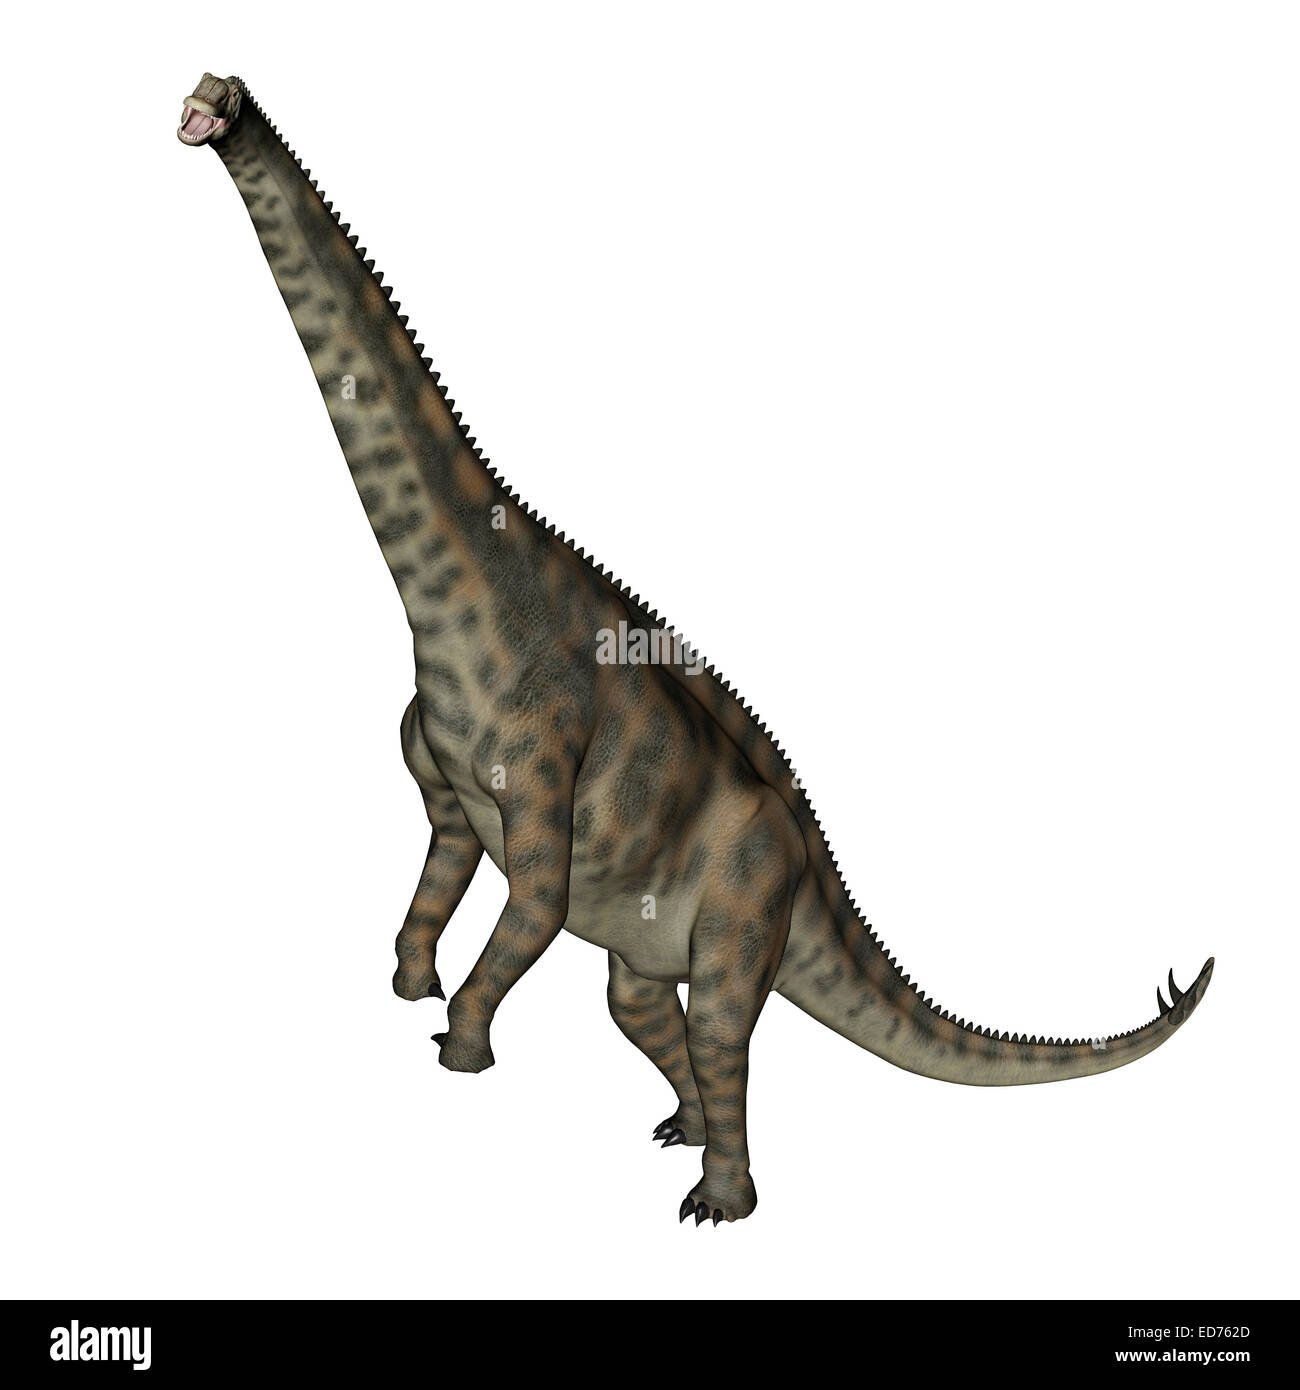 Spinophorosaurus dinosaur standing up, white background. Stock Photo